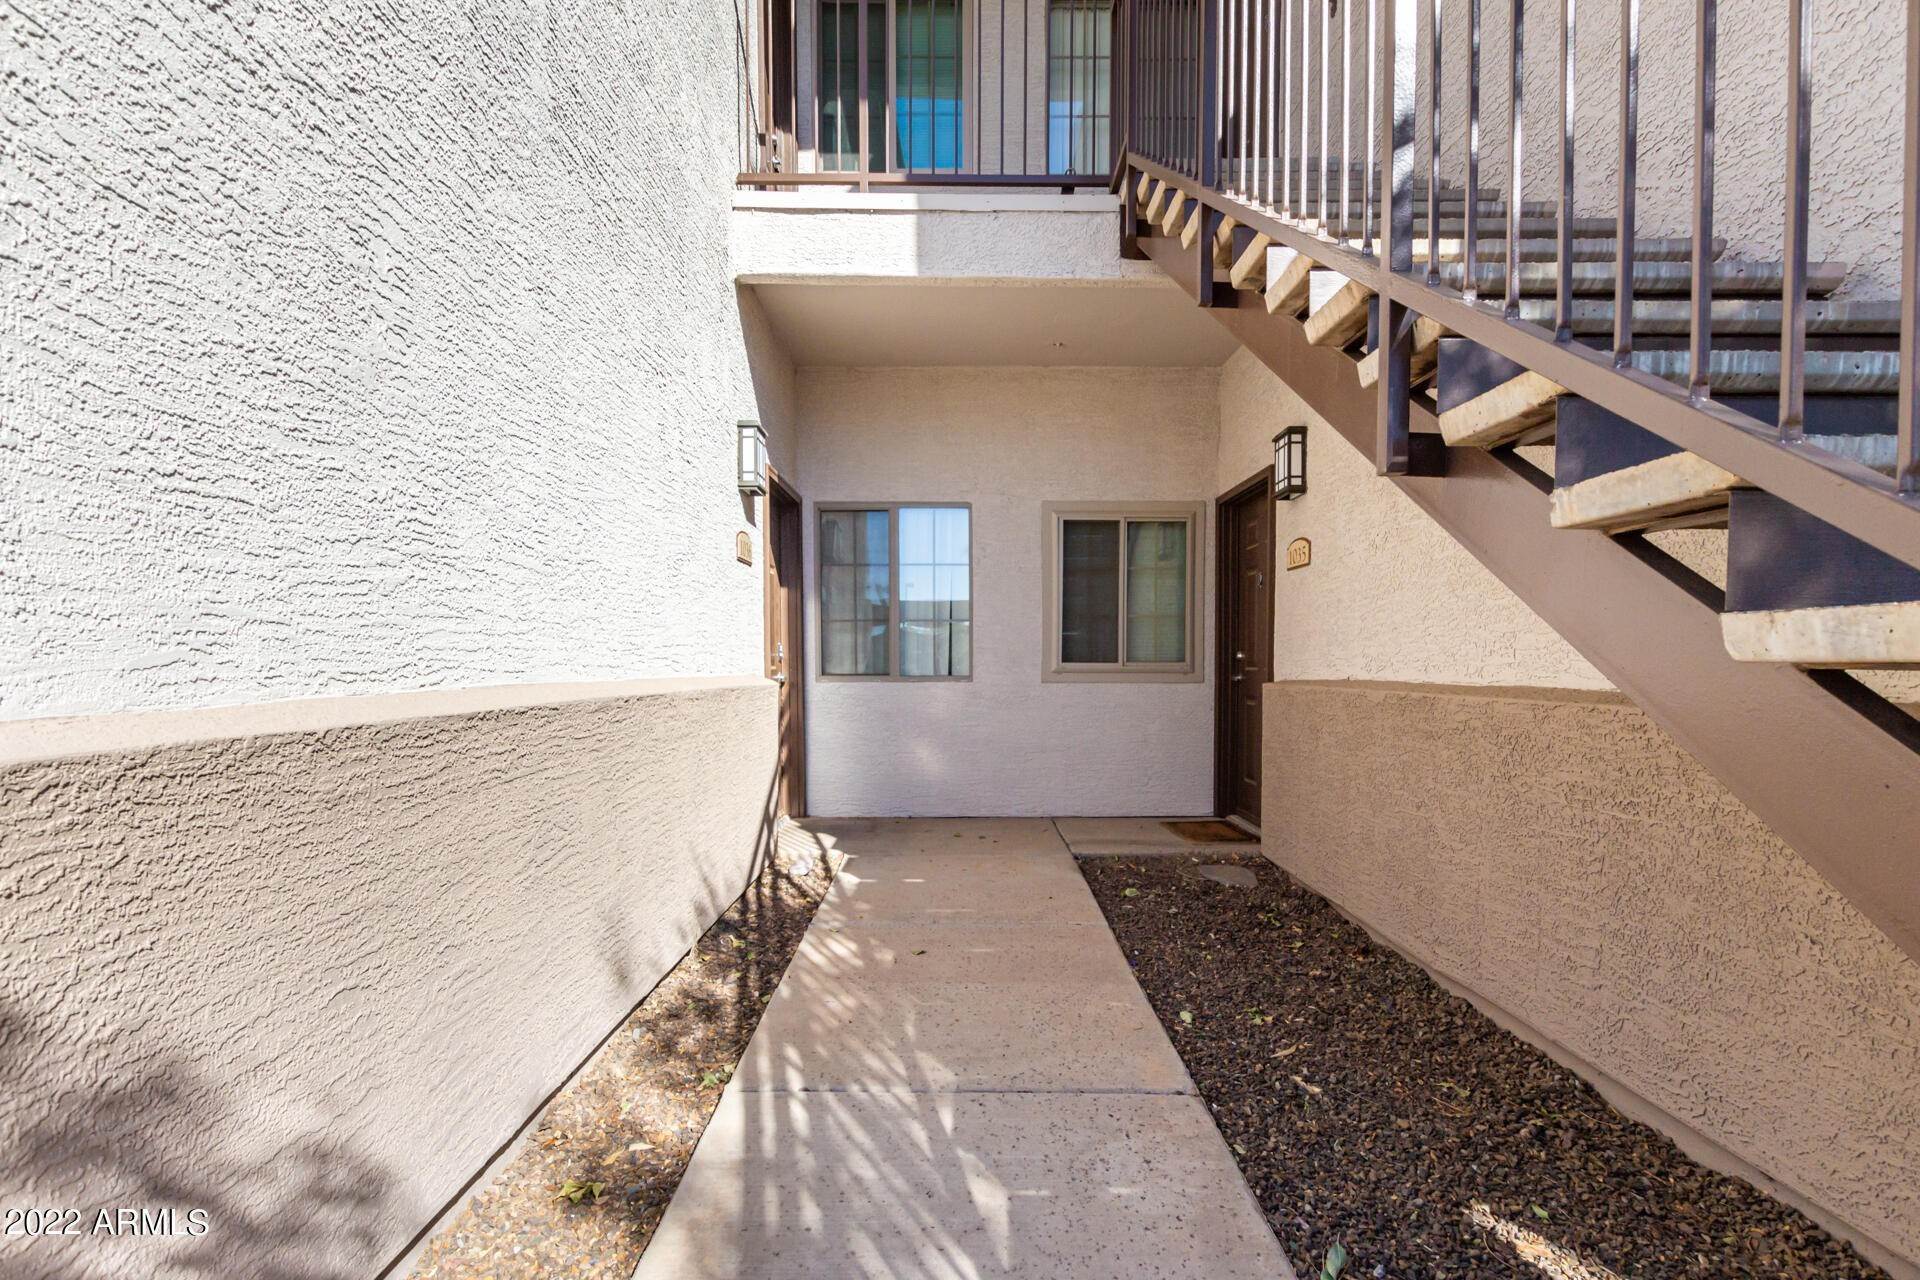 2. Apartment for Sale at Mesa, AZ 85206